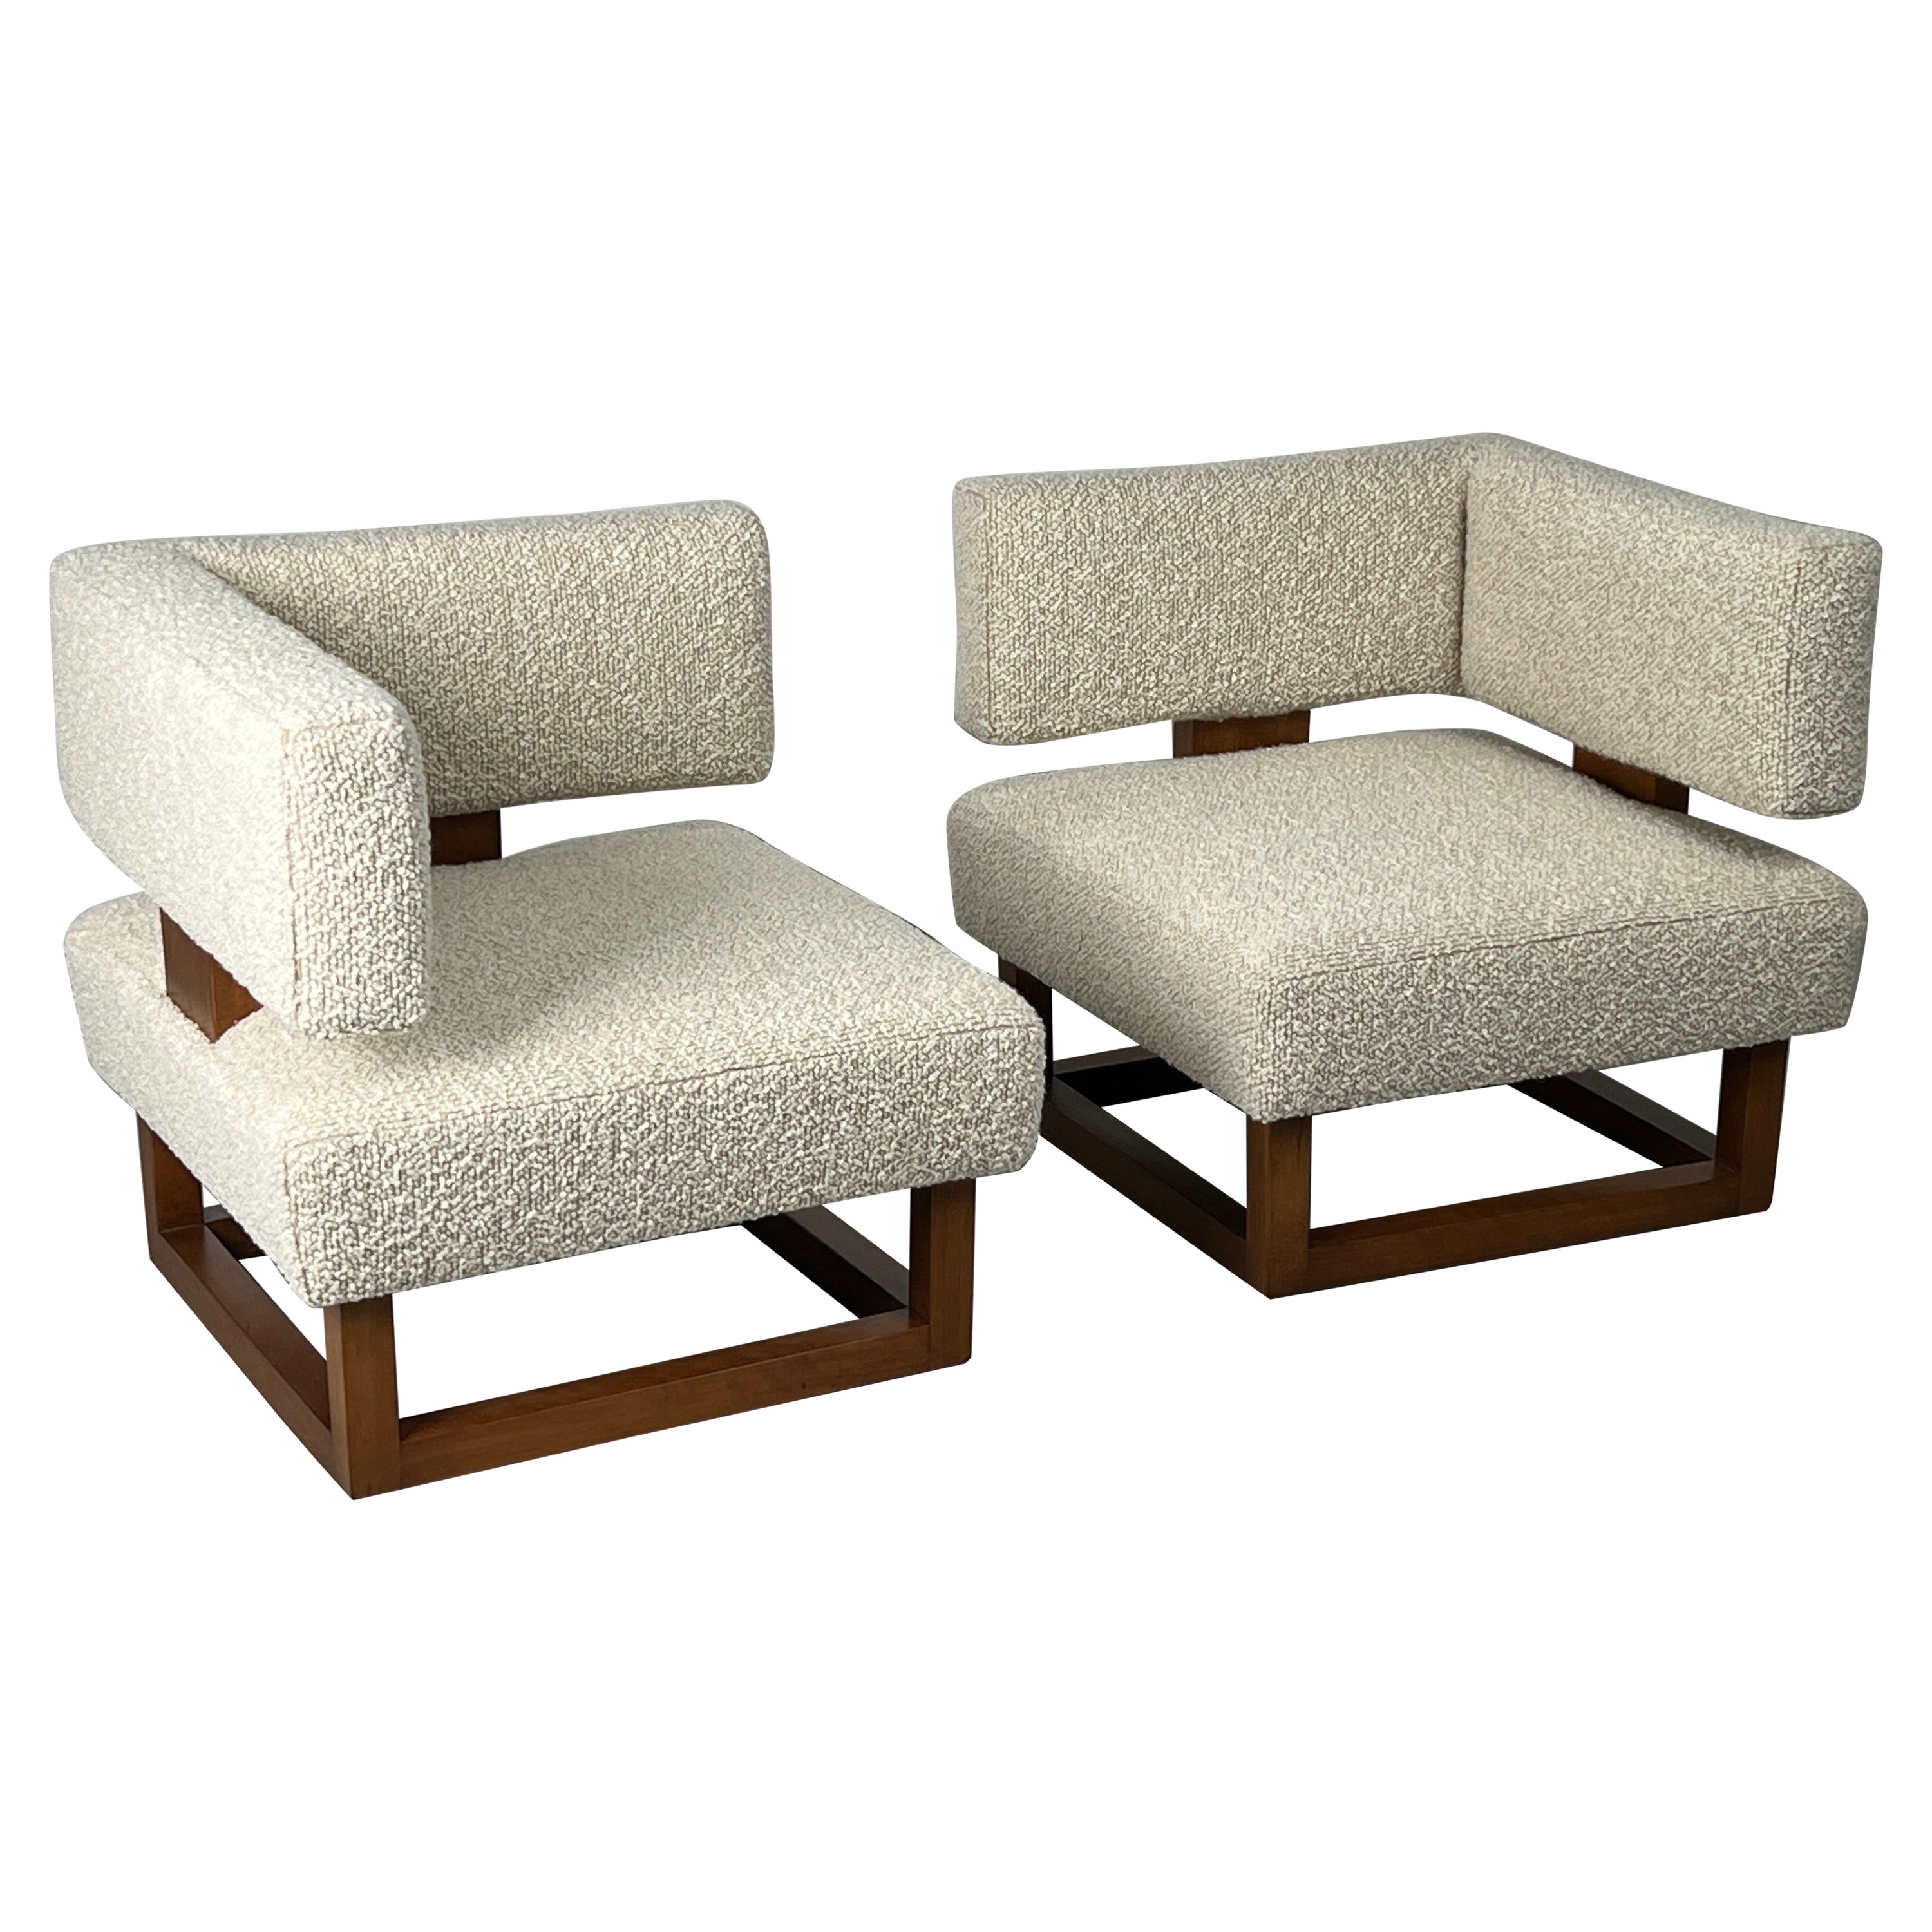 Pair of Lounge Chairs / Settee by Brown Saltman 